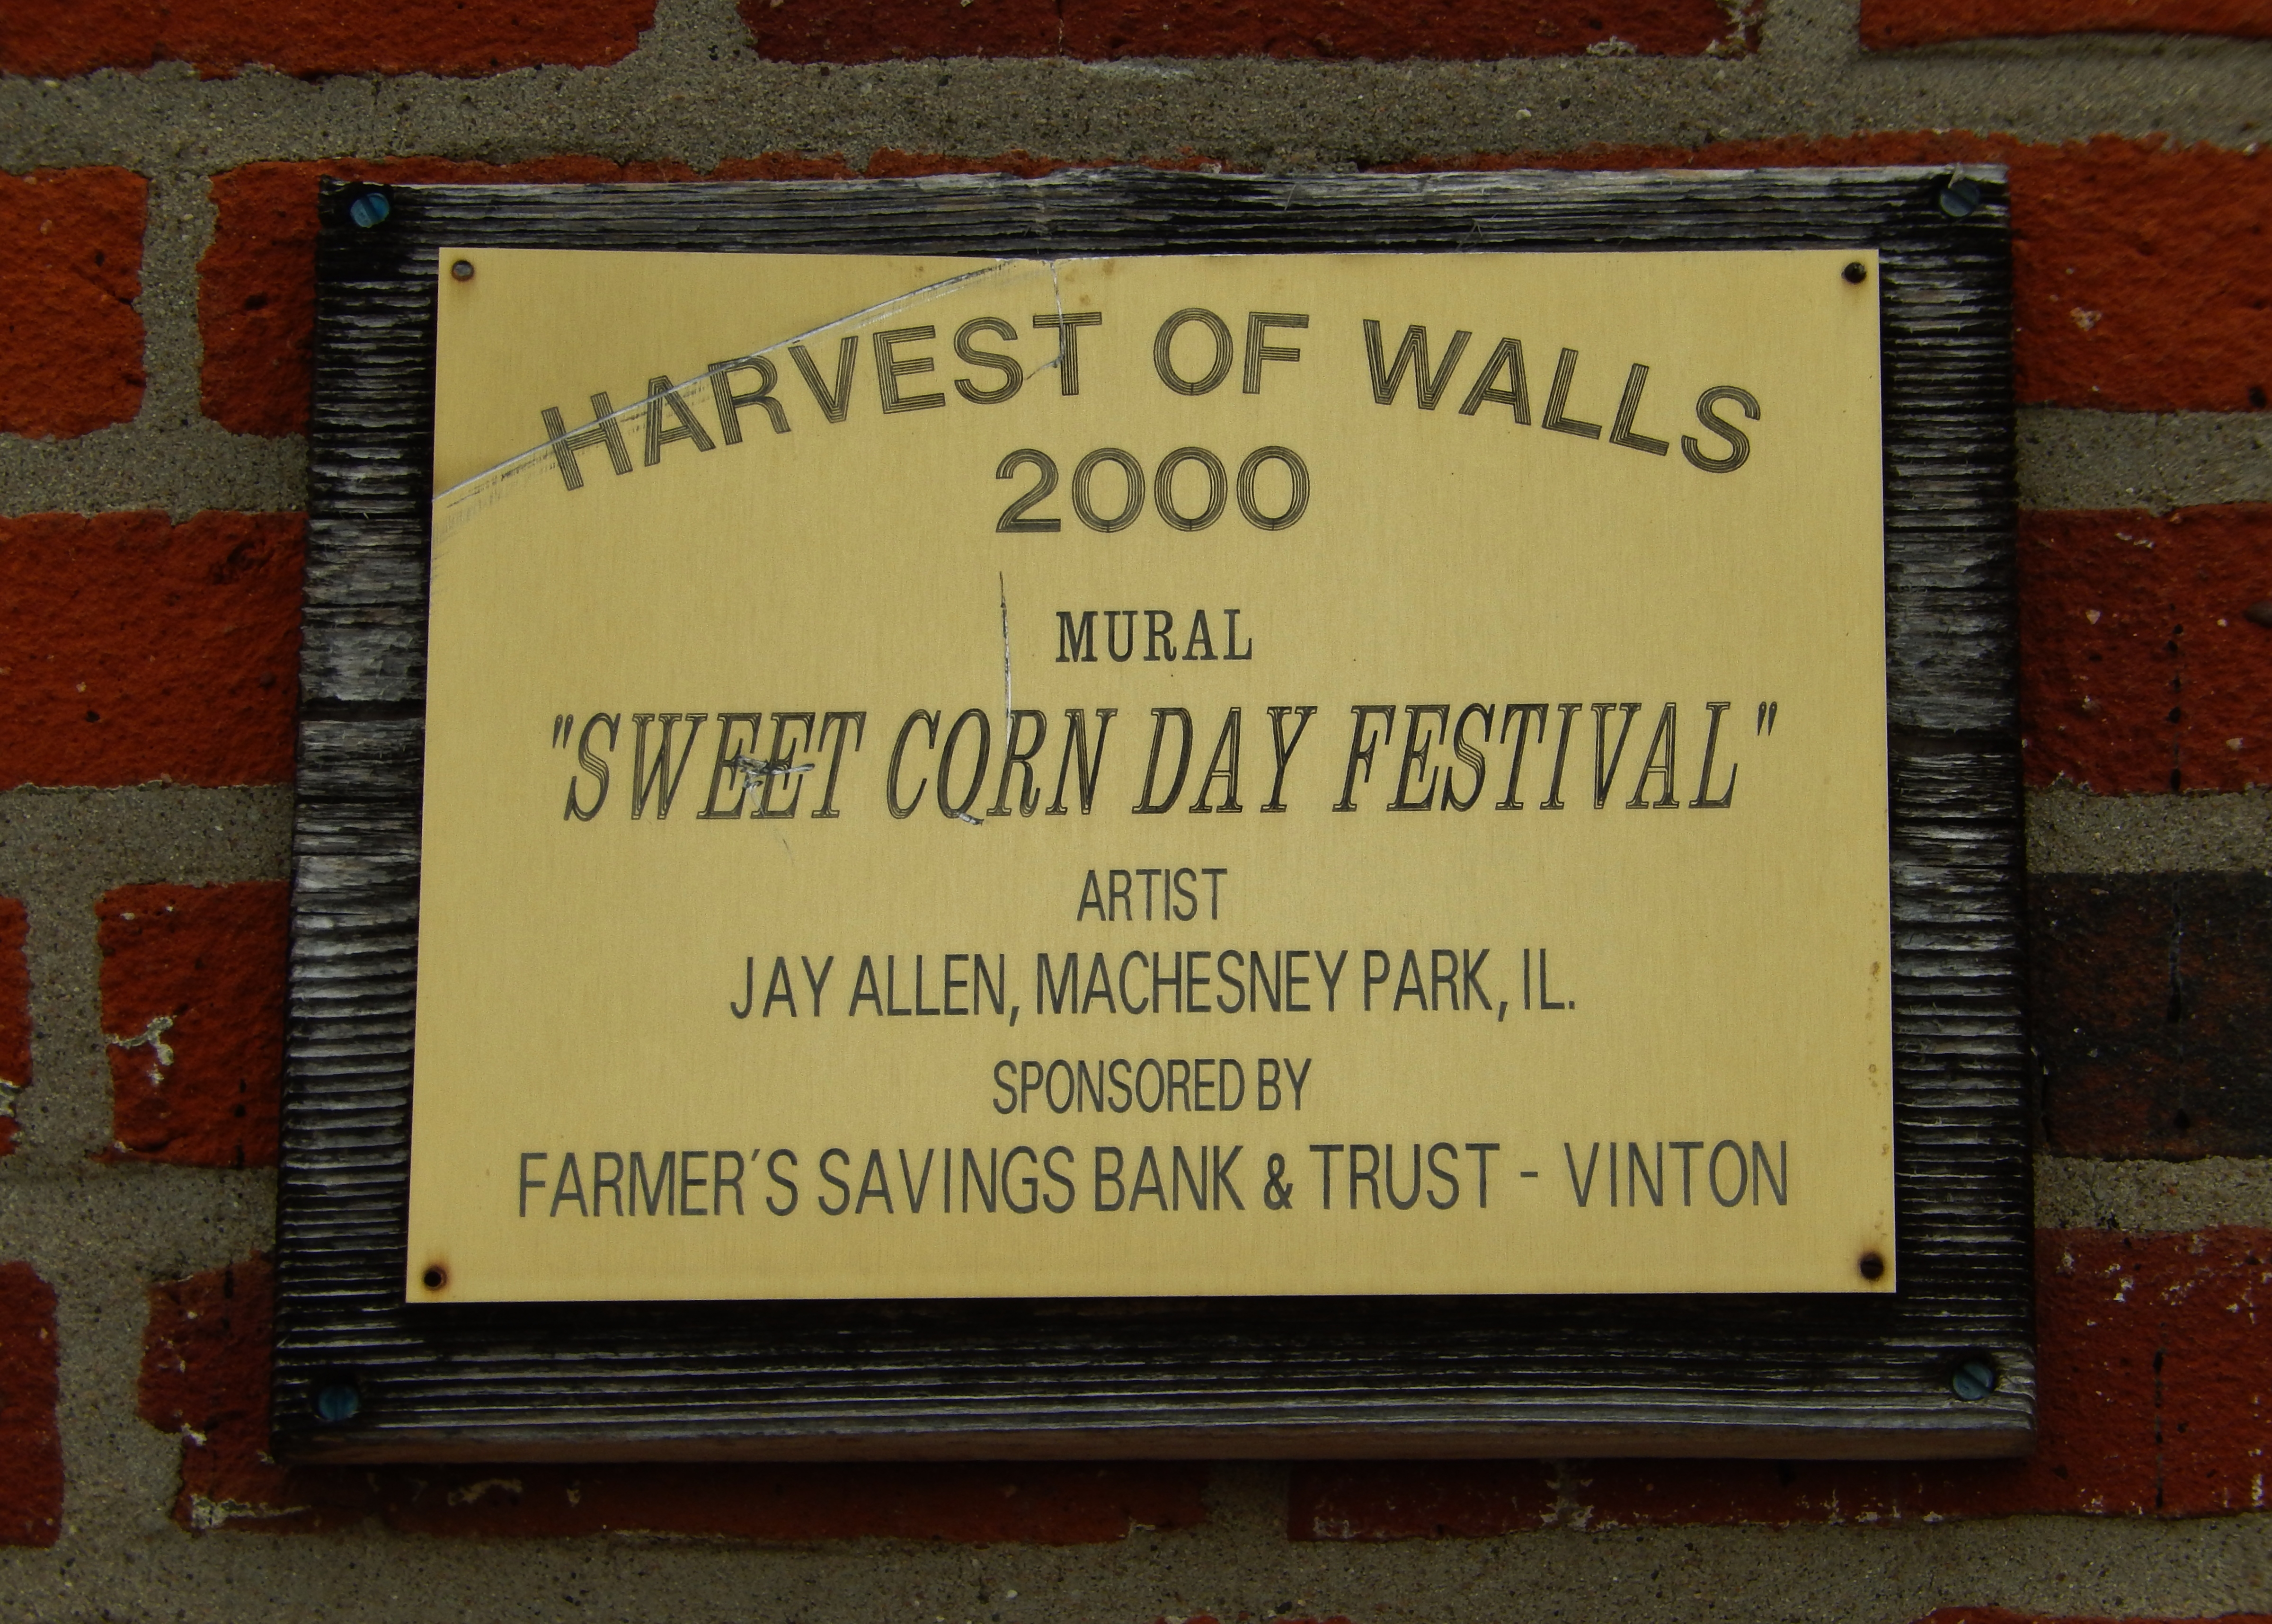 Sweet Corn Day Festival Mural Plaque